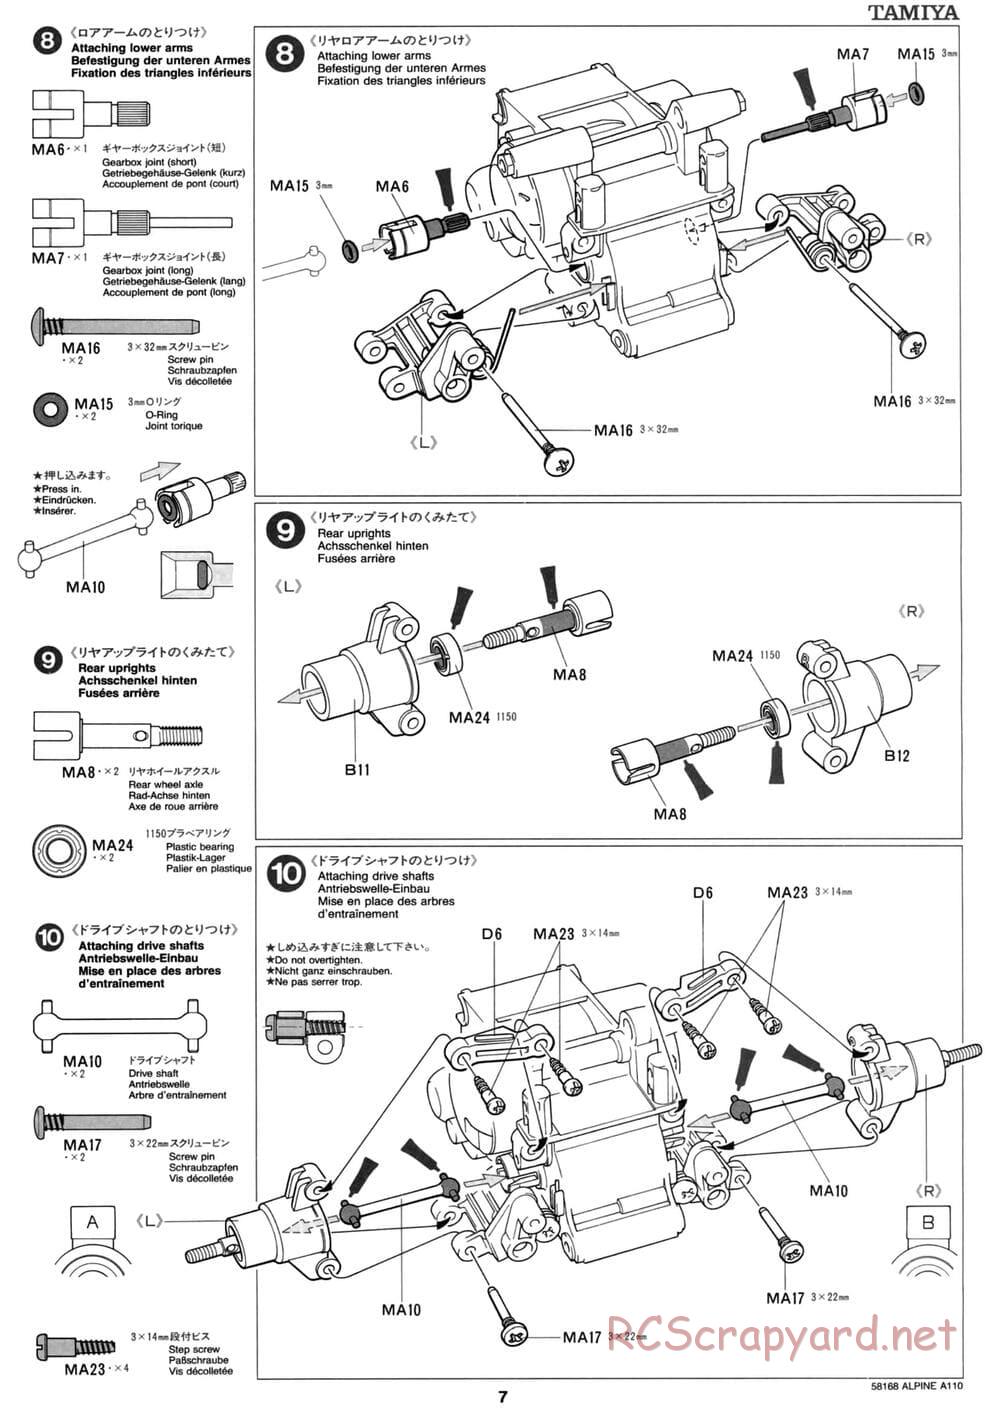 Tamiya - Alpine A110 - M02 Chassis - Manual - Page 7